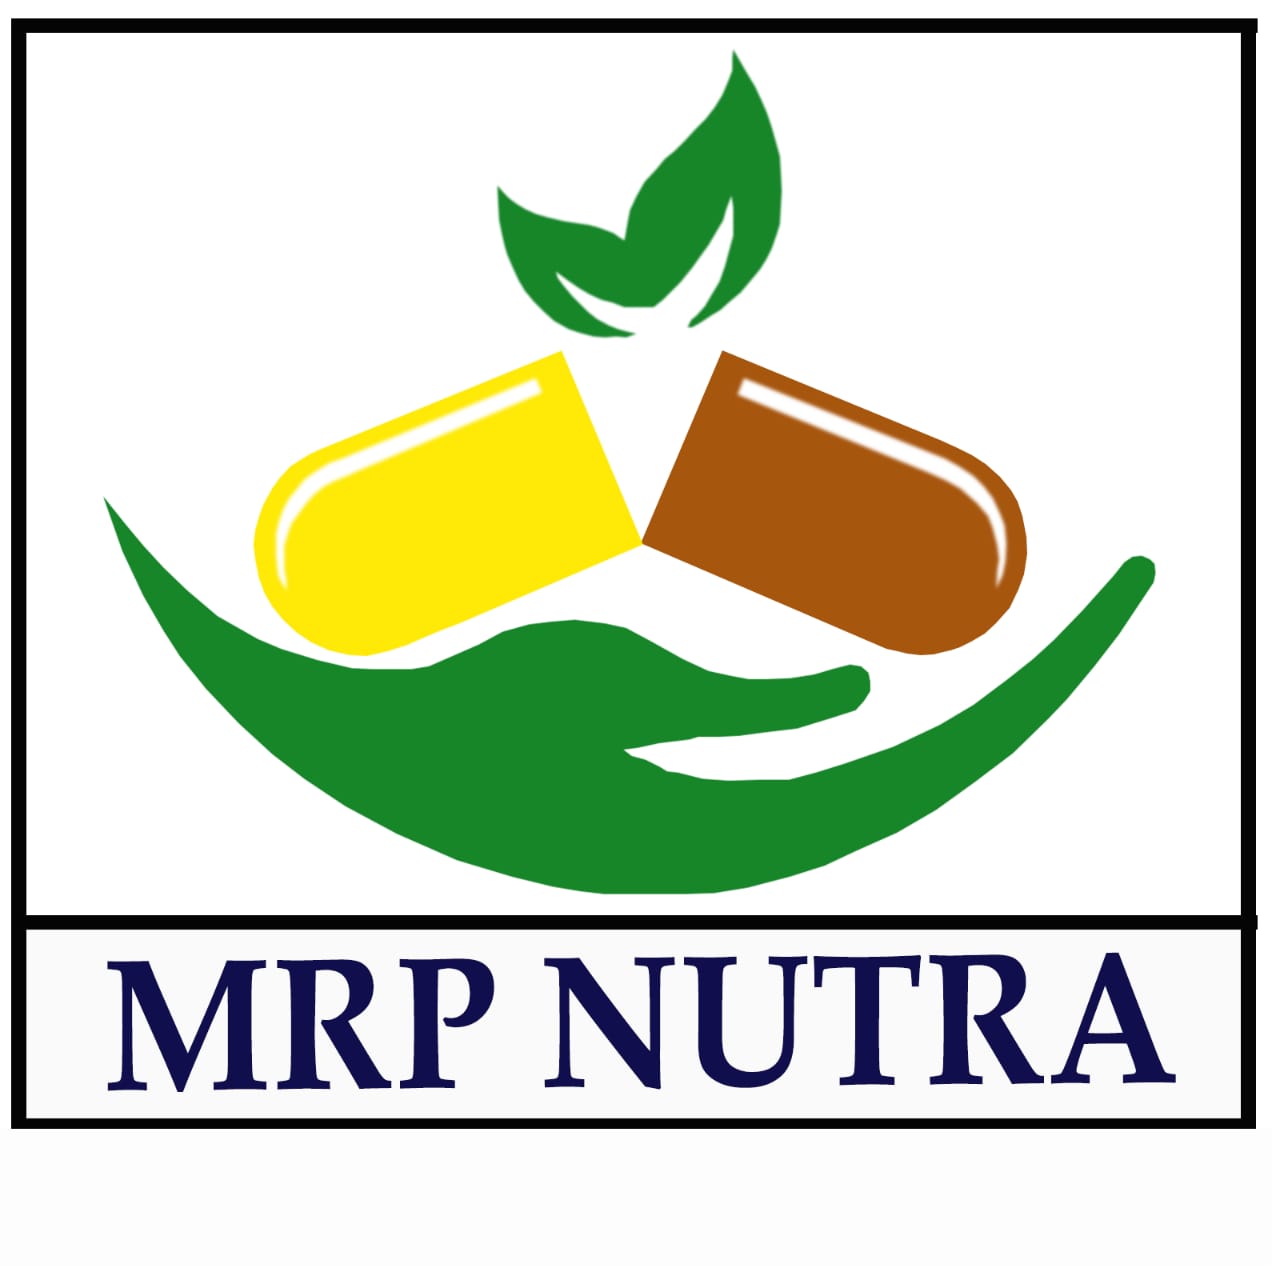 MRP NUTRACEUTICALS